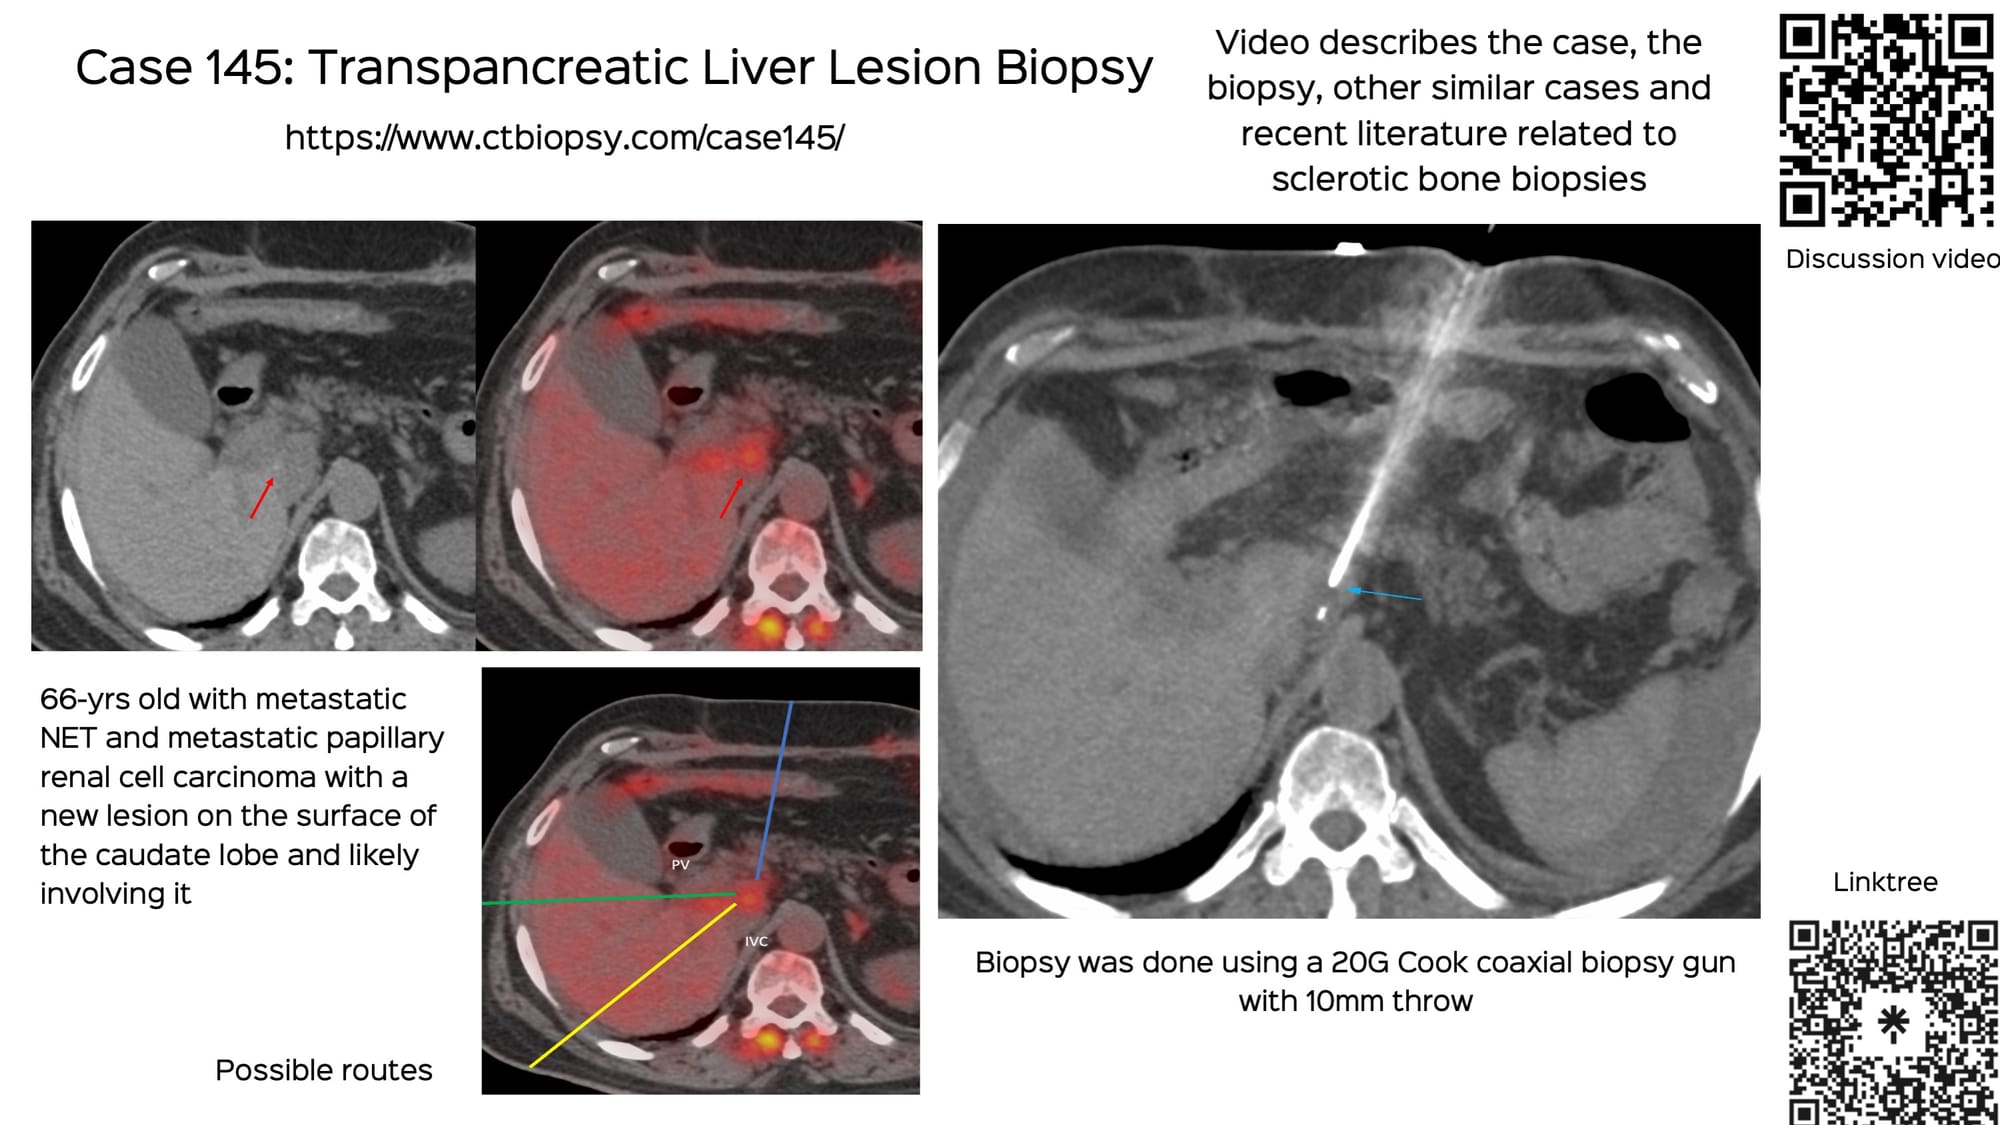 Case 145: Transpancreatic Liver Lesion Biopsy